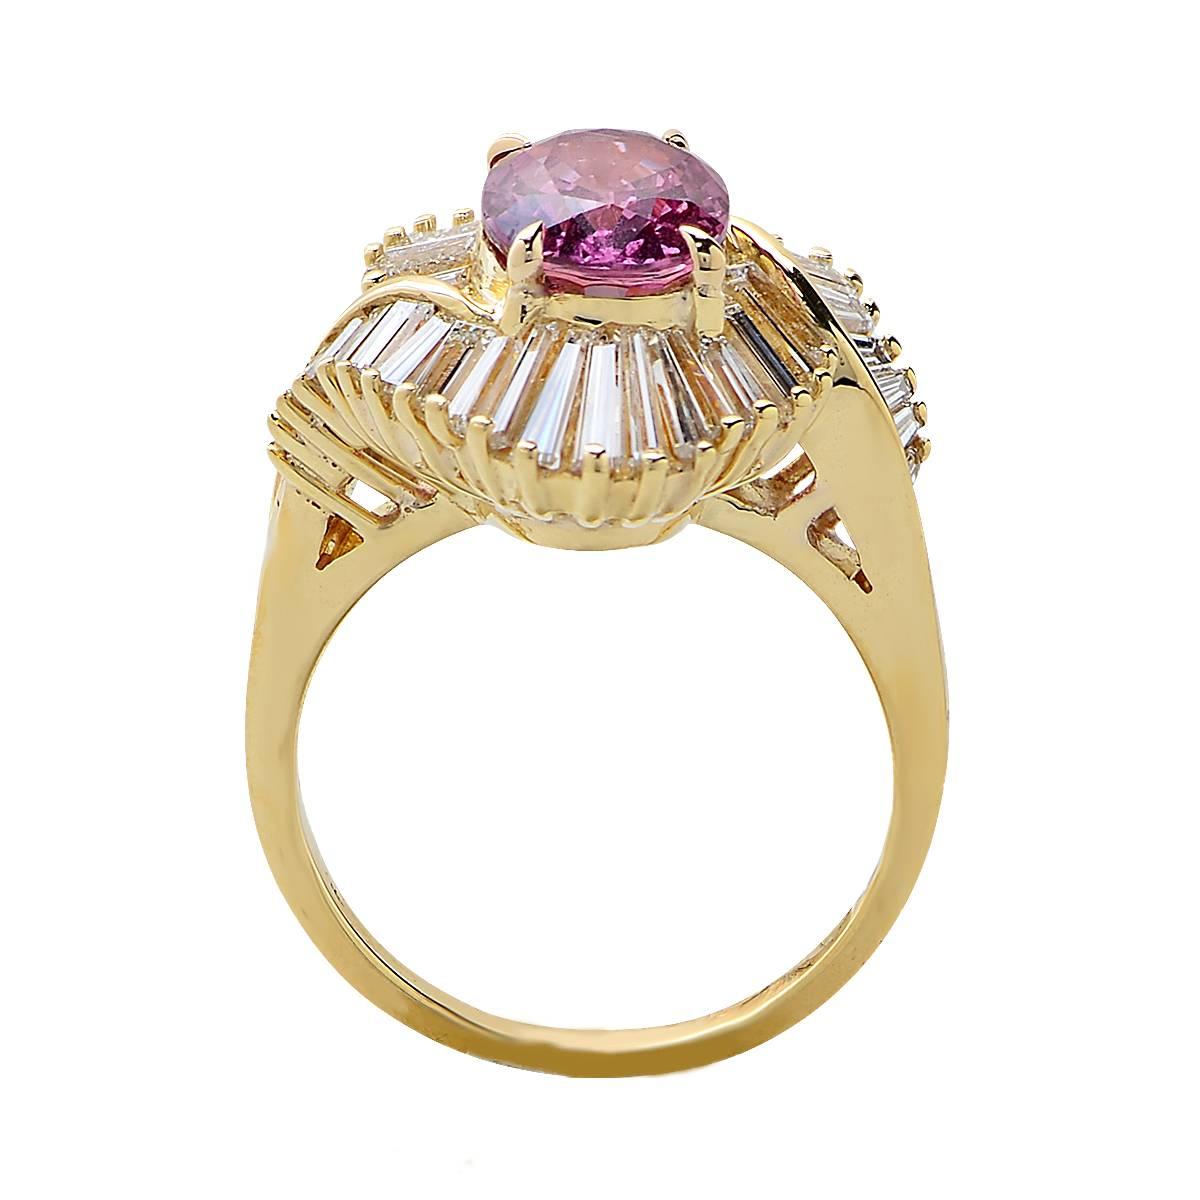 Baguette Cut 2.62 Carat Pink Sapphire Diamond Gold Ring